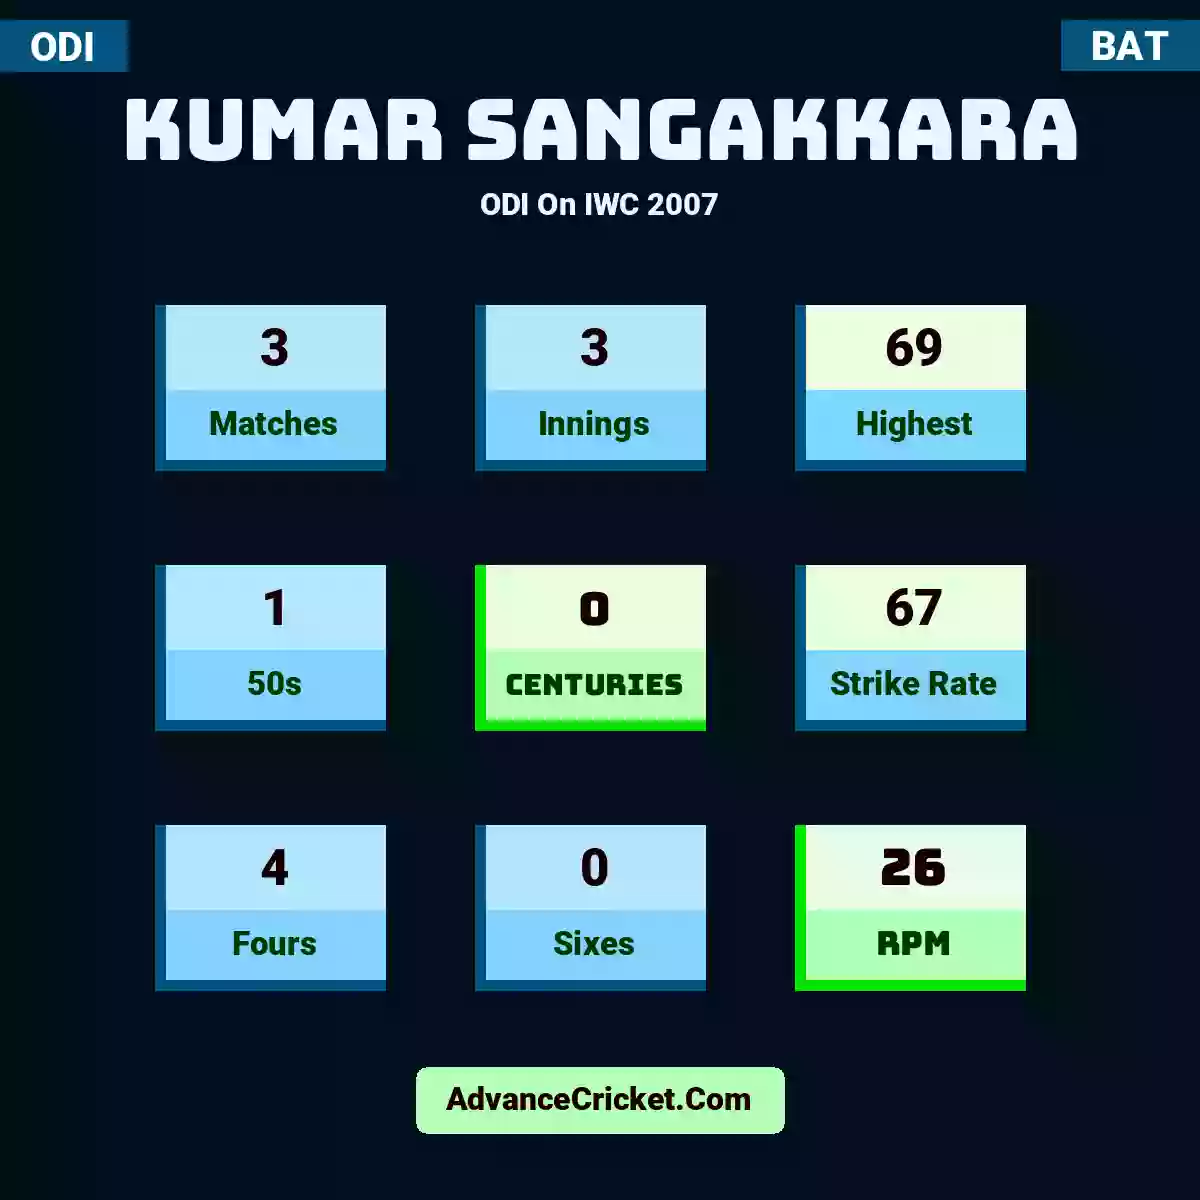 Kumar Sangakkara ODI  On IWC 2007, Kumar Sangakkara played 3 matches, scored 69 runs as highest, 1 half-centuries, and 0 centuries, with a strike rate of 67. K.Sangakkara hit 4 fours and 0 sixes, with an RPM of 26.